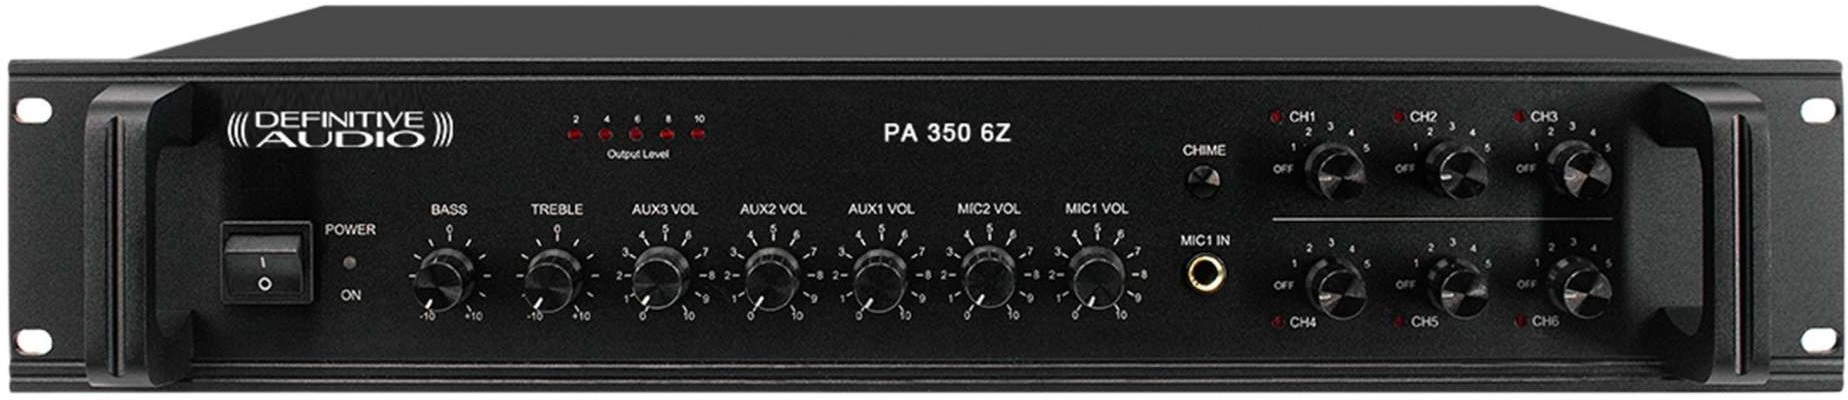 Definitive Audio Pa 350 6z - Multi-kanalen krachtversterker - Main picture